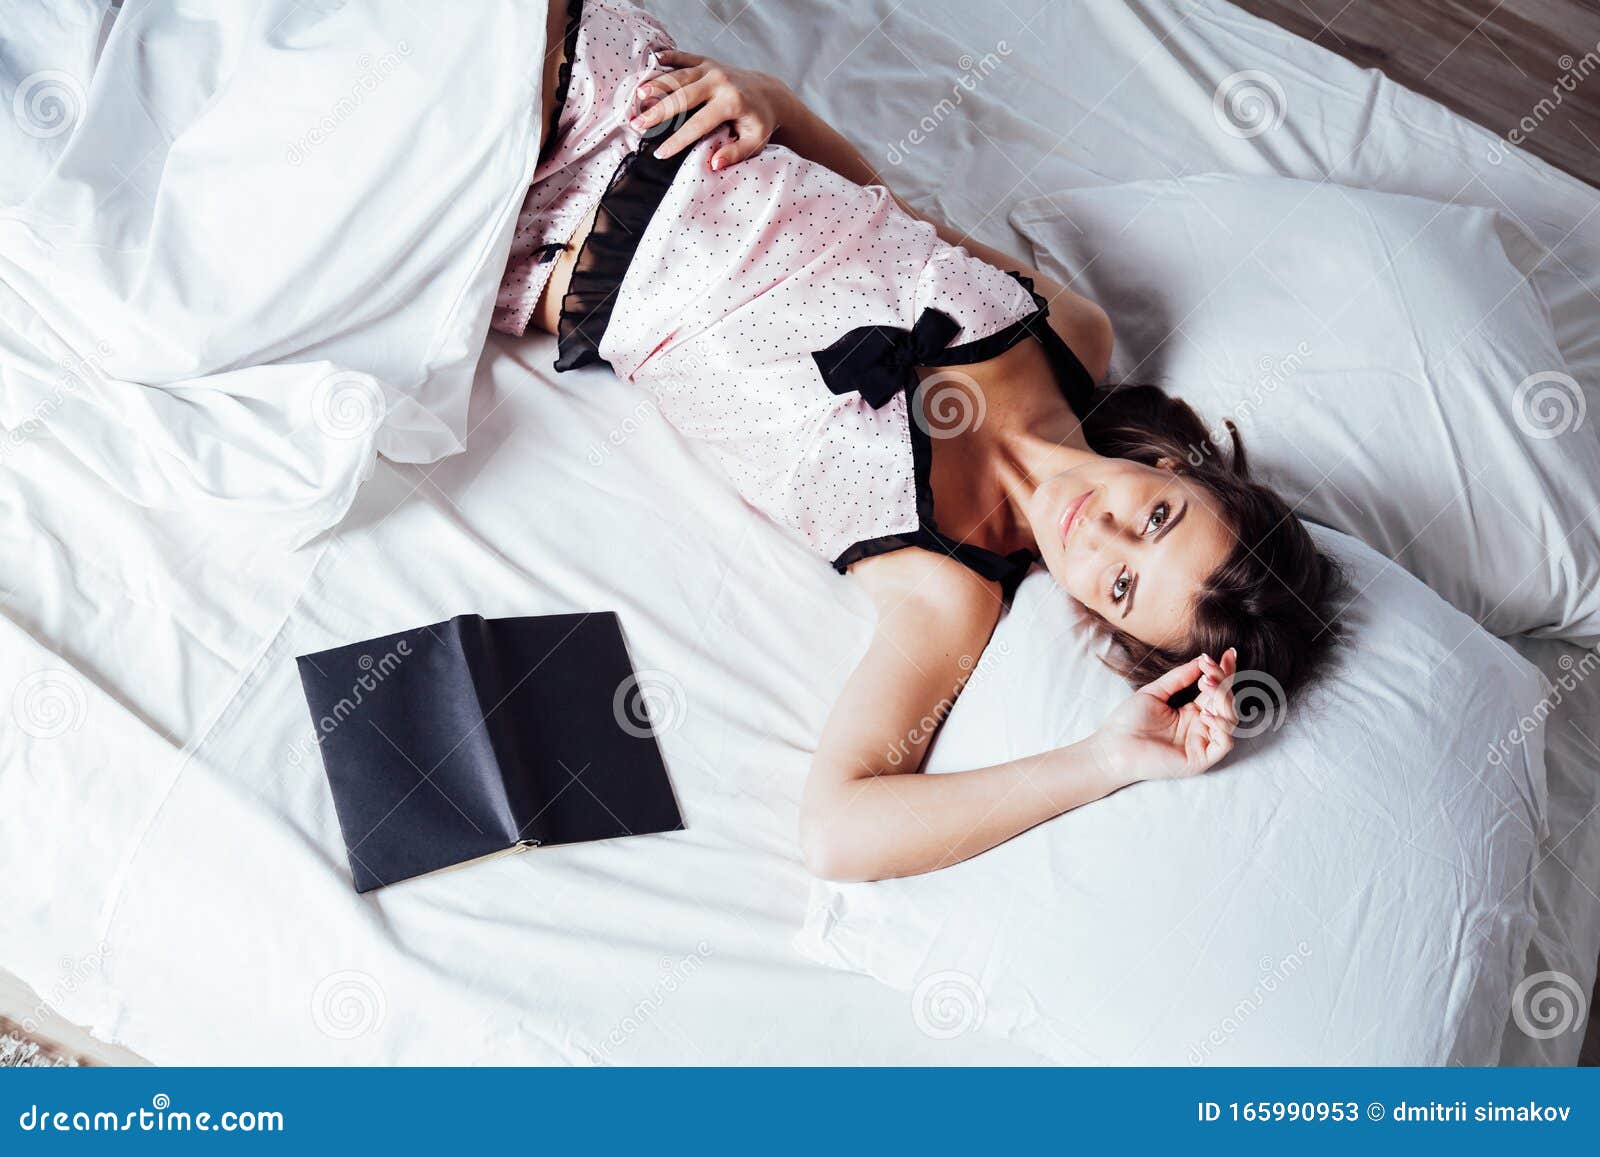 Девушка В Пижаме В Кровати Фото